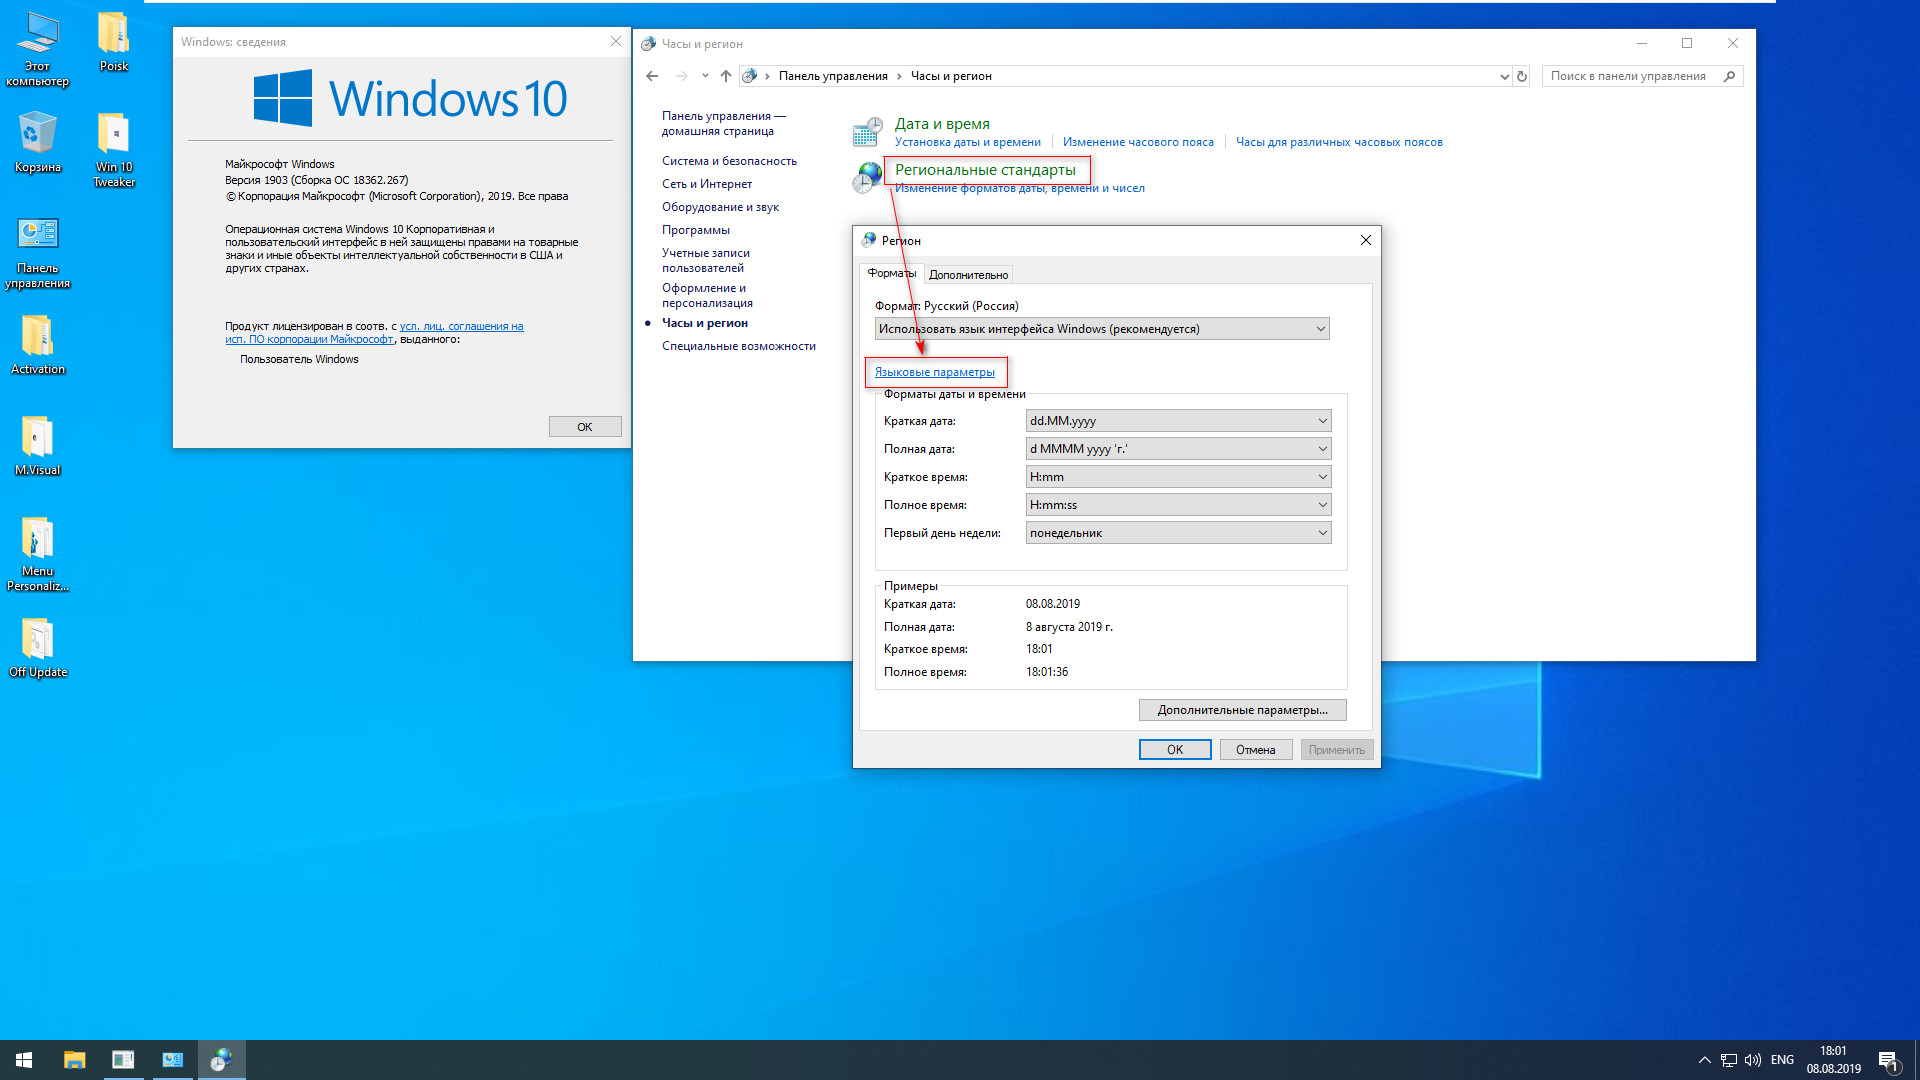 Windows 10 Enterprise x64 lite 1903 build 18362.267 by Zosma.iso - 러시아어 한글화 시도 - 그래서 그냥 원본대로 설치 후에 한글화 시도 2019-08-09_000147.jpg